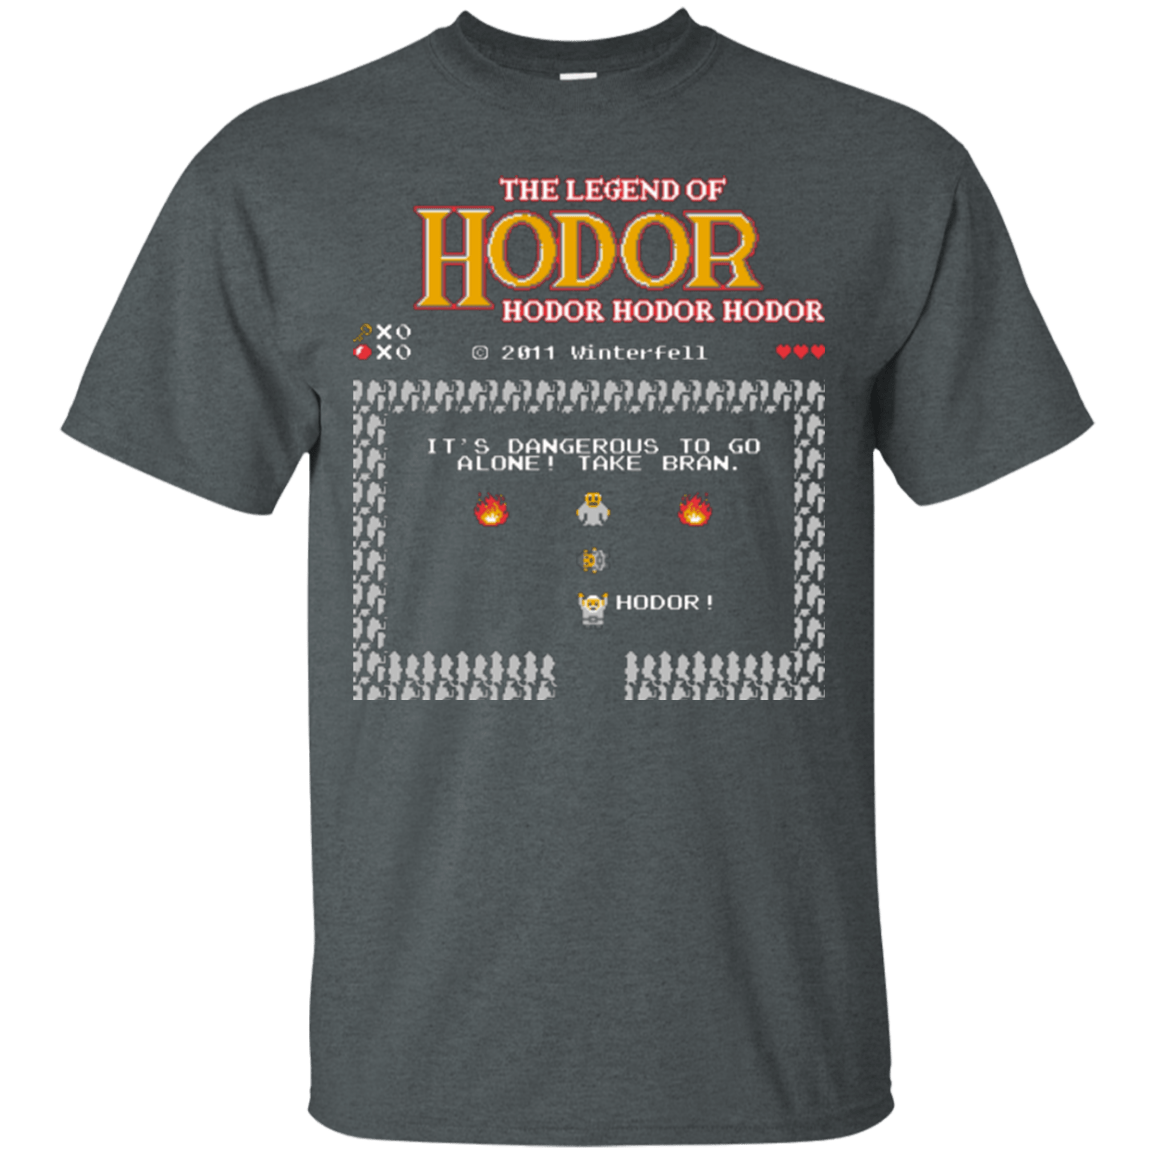 The Legend of Hodor T-Shirt